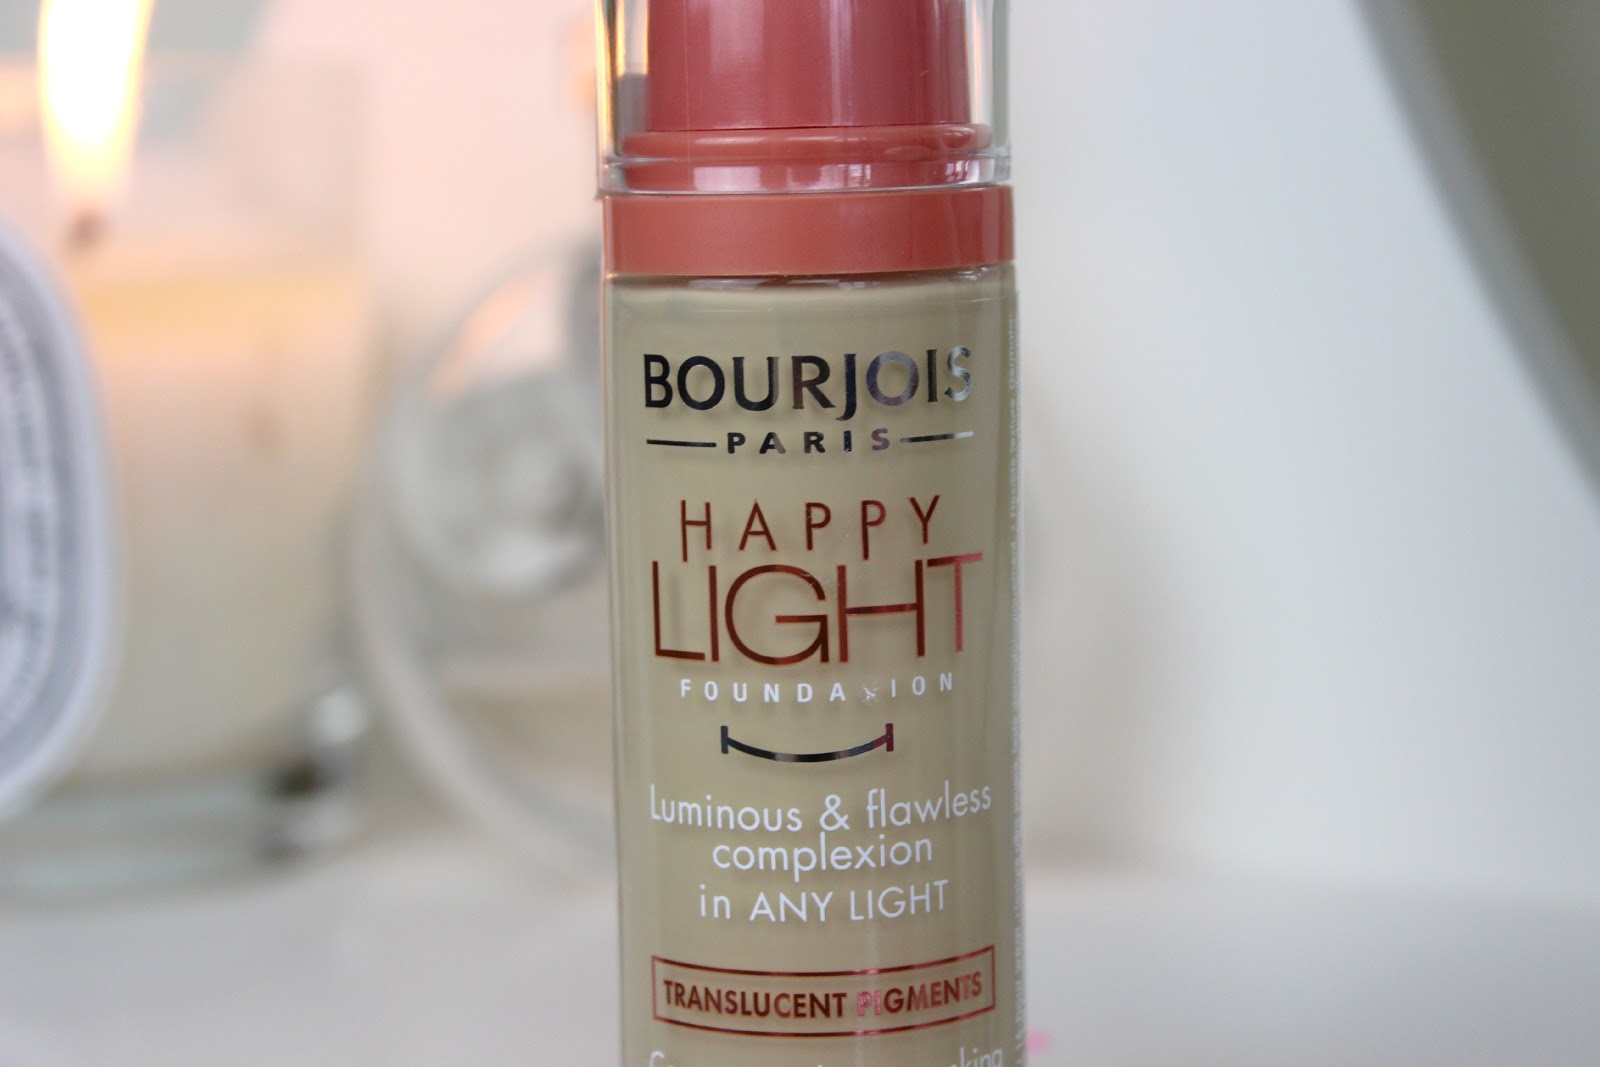 Bourjois Happy Light Foundation packaging